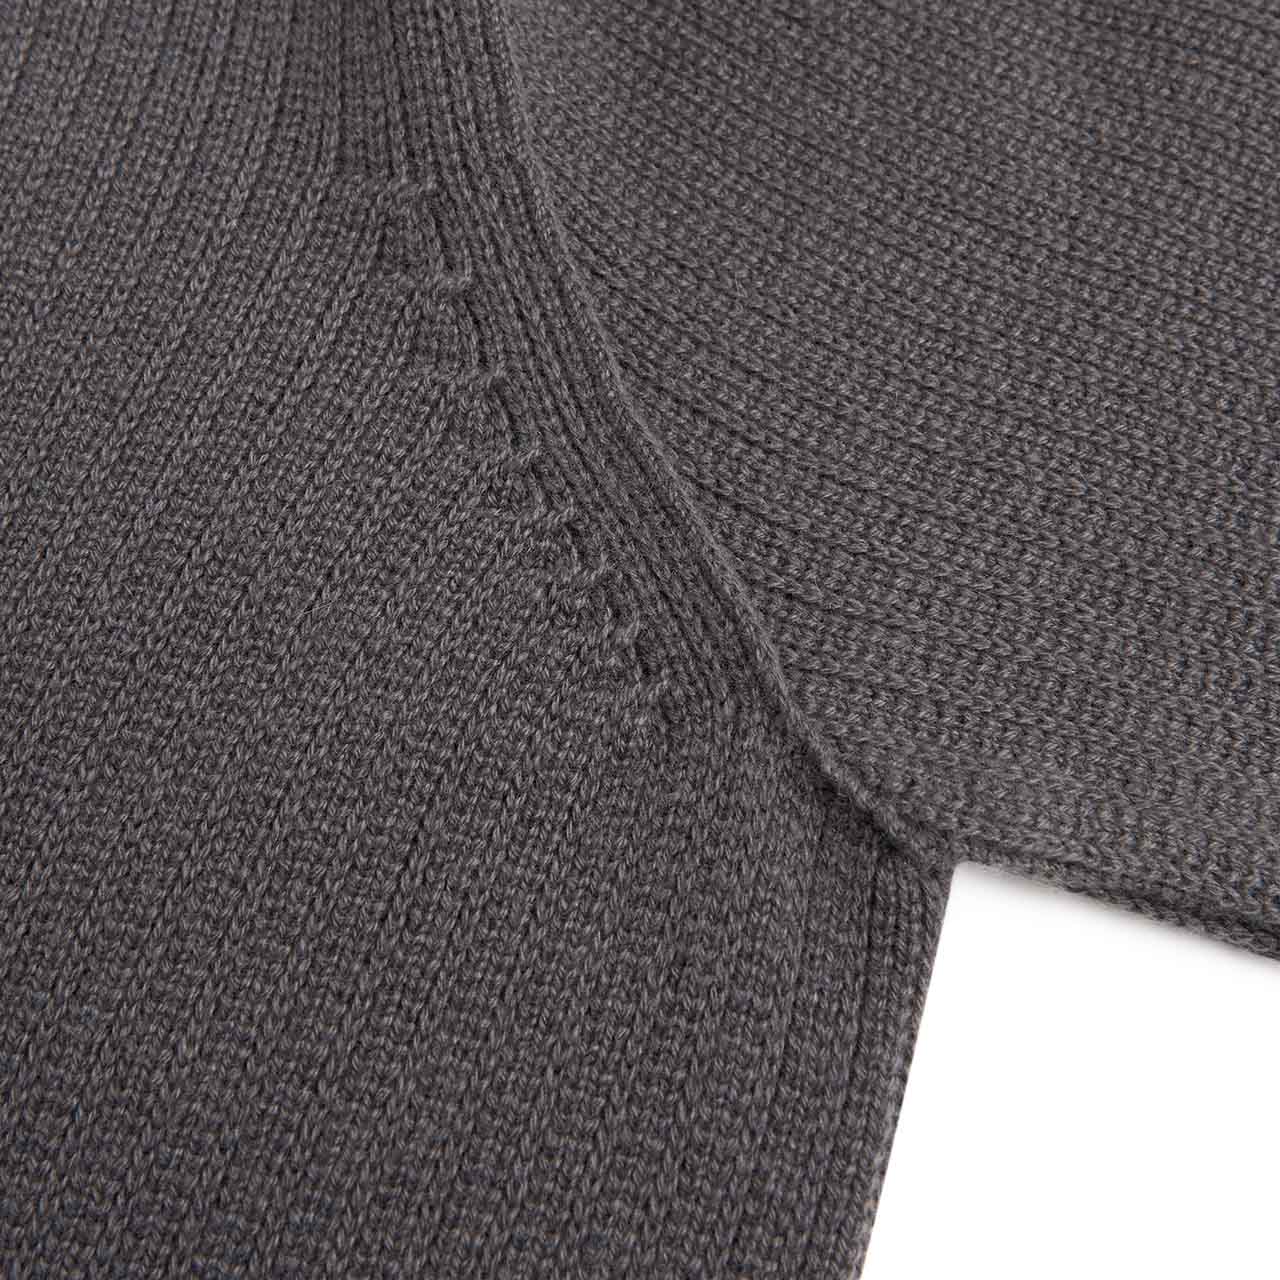 stone island ghost piece cashmere zip sweater (anthracite)